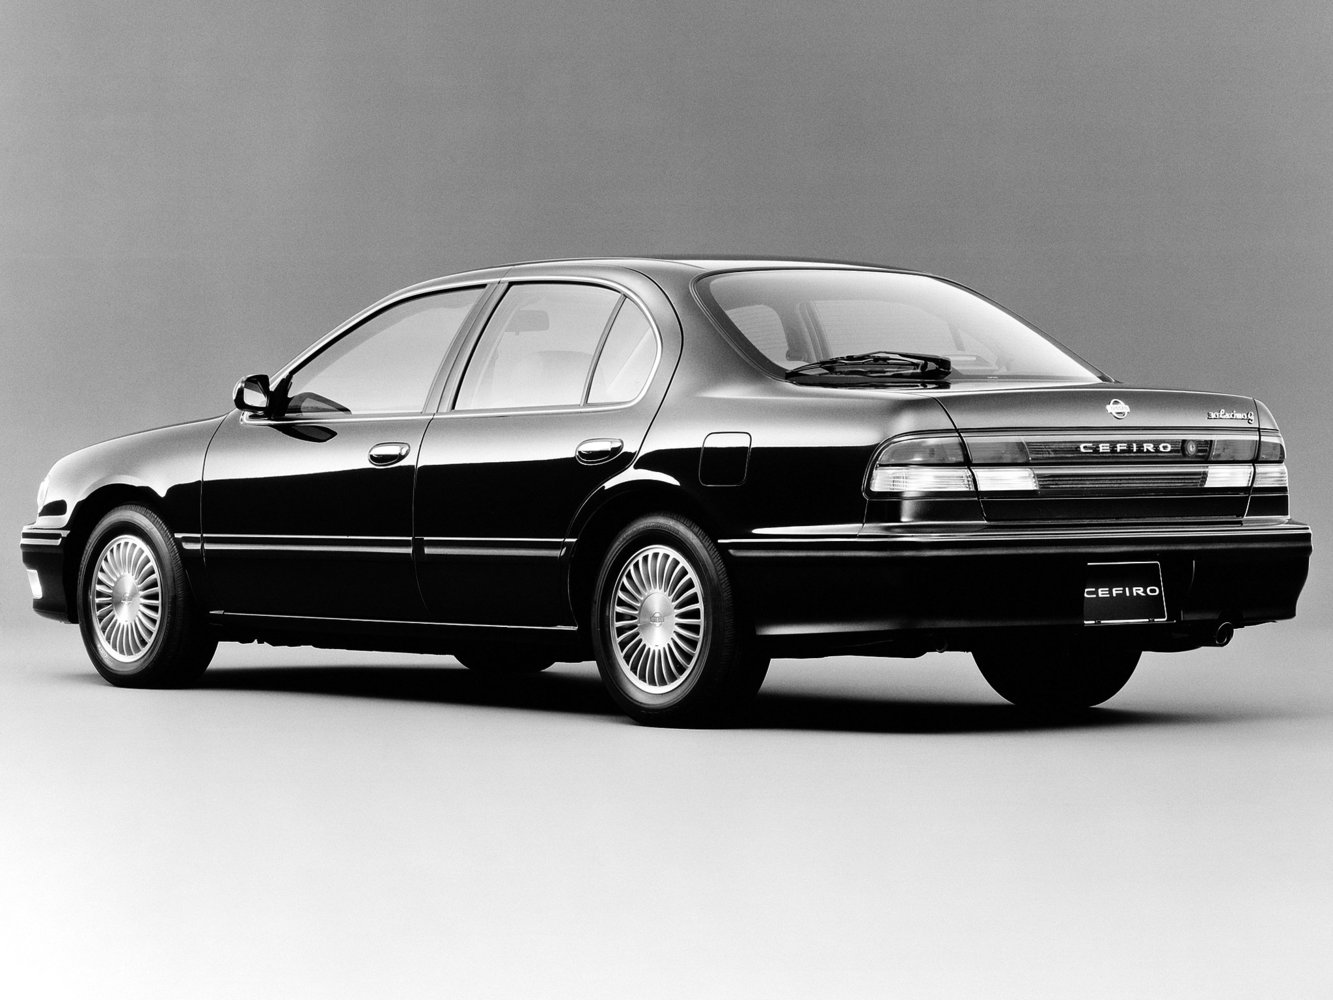 седан Nissan Cefiro 1994 - 1998г выпуска модификация 2.0 AT (155 л.с.)